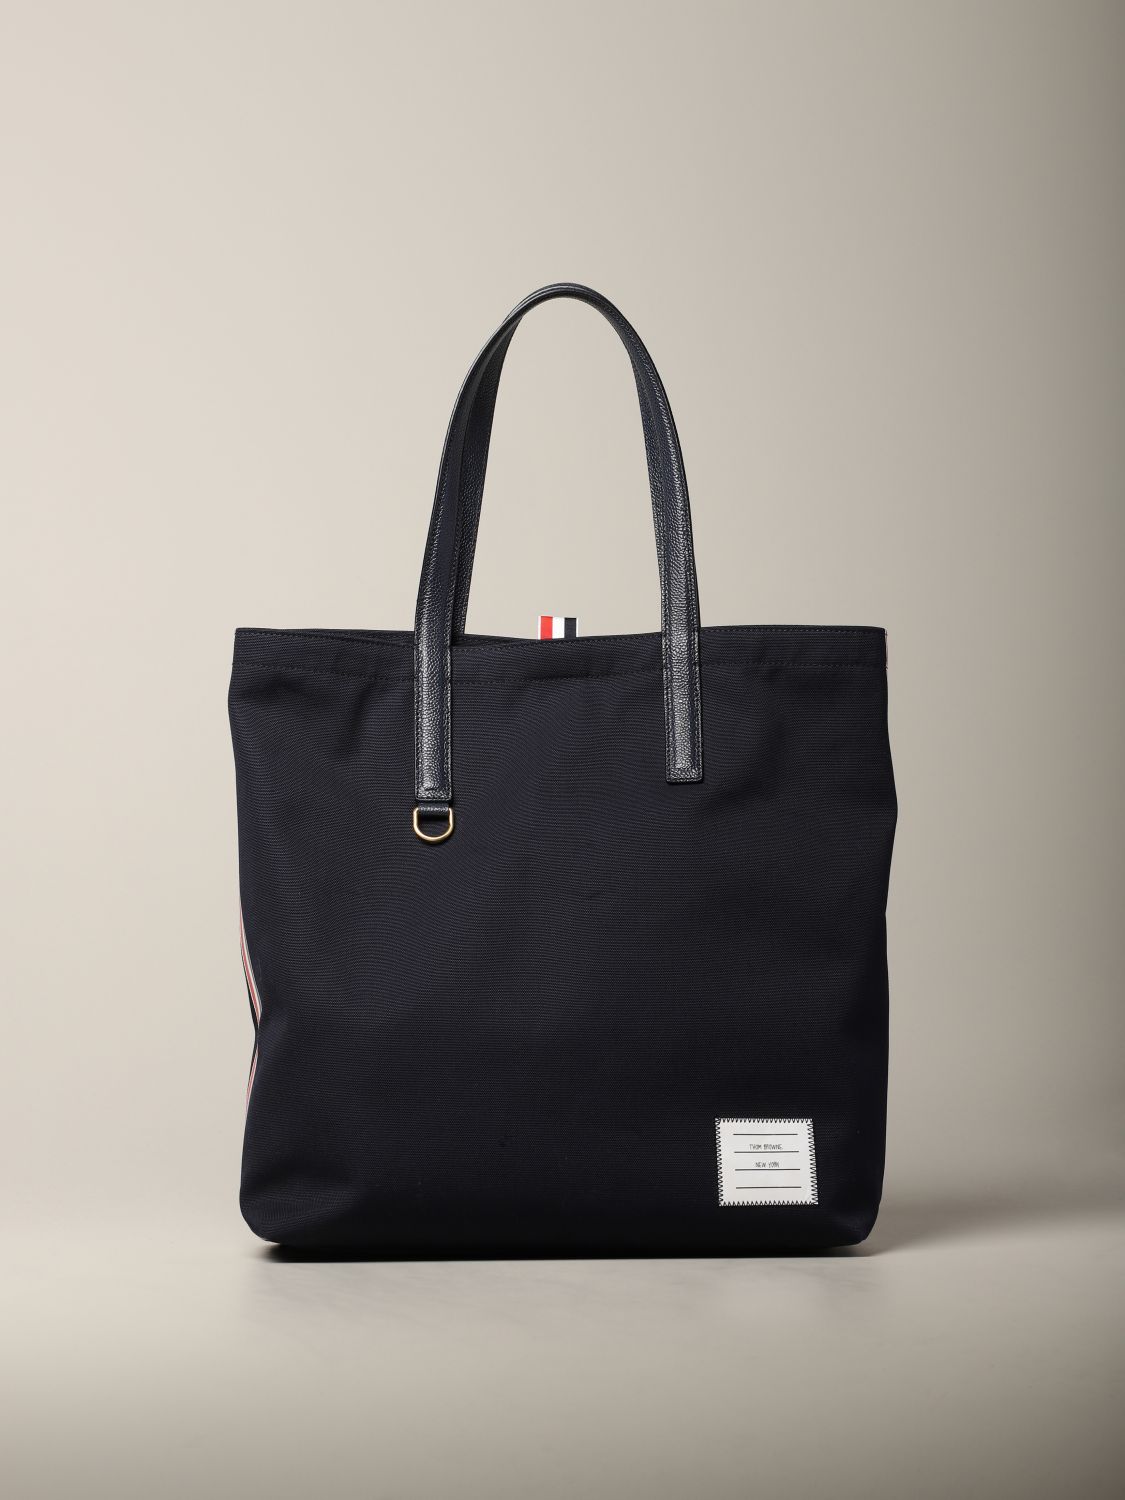 Thom Browne Outlet: Bags men | Bags Thom Browne Men Blue | Bags Thom ...